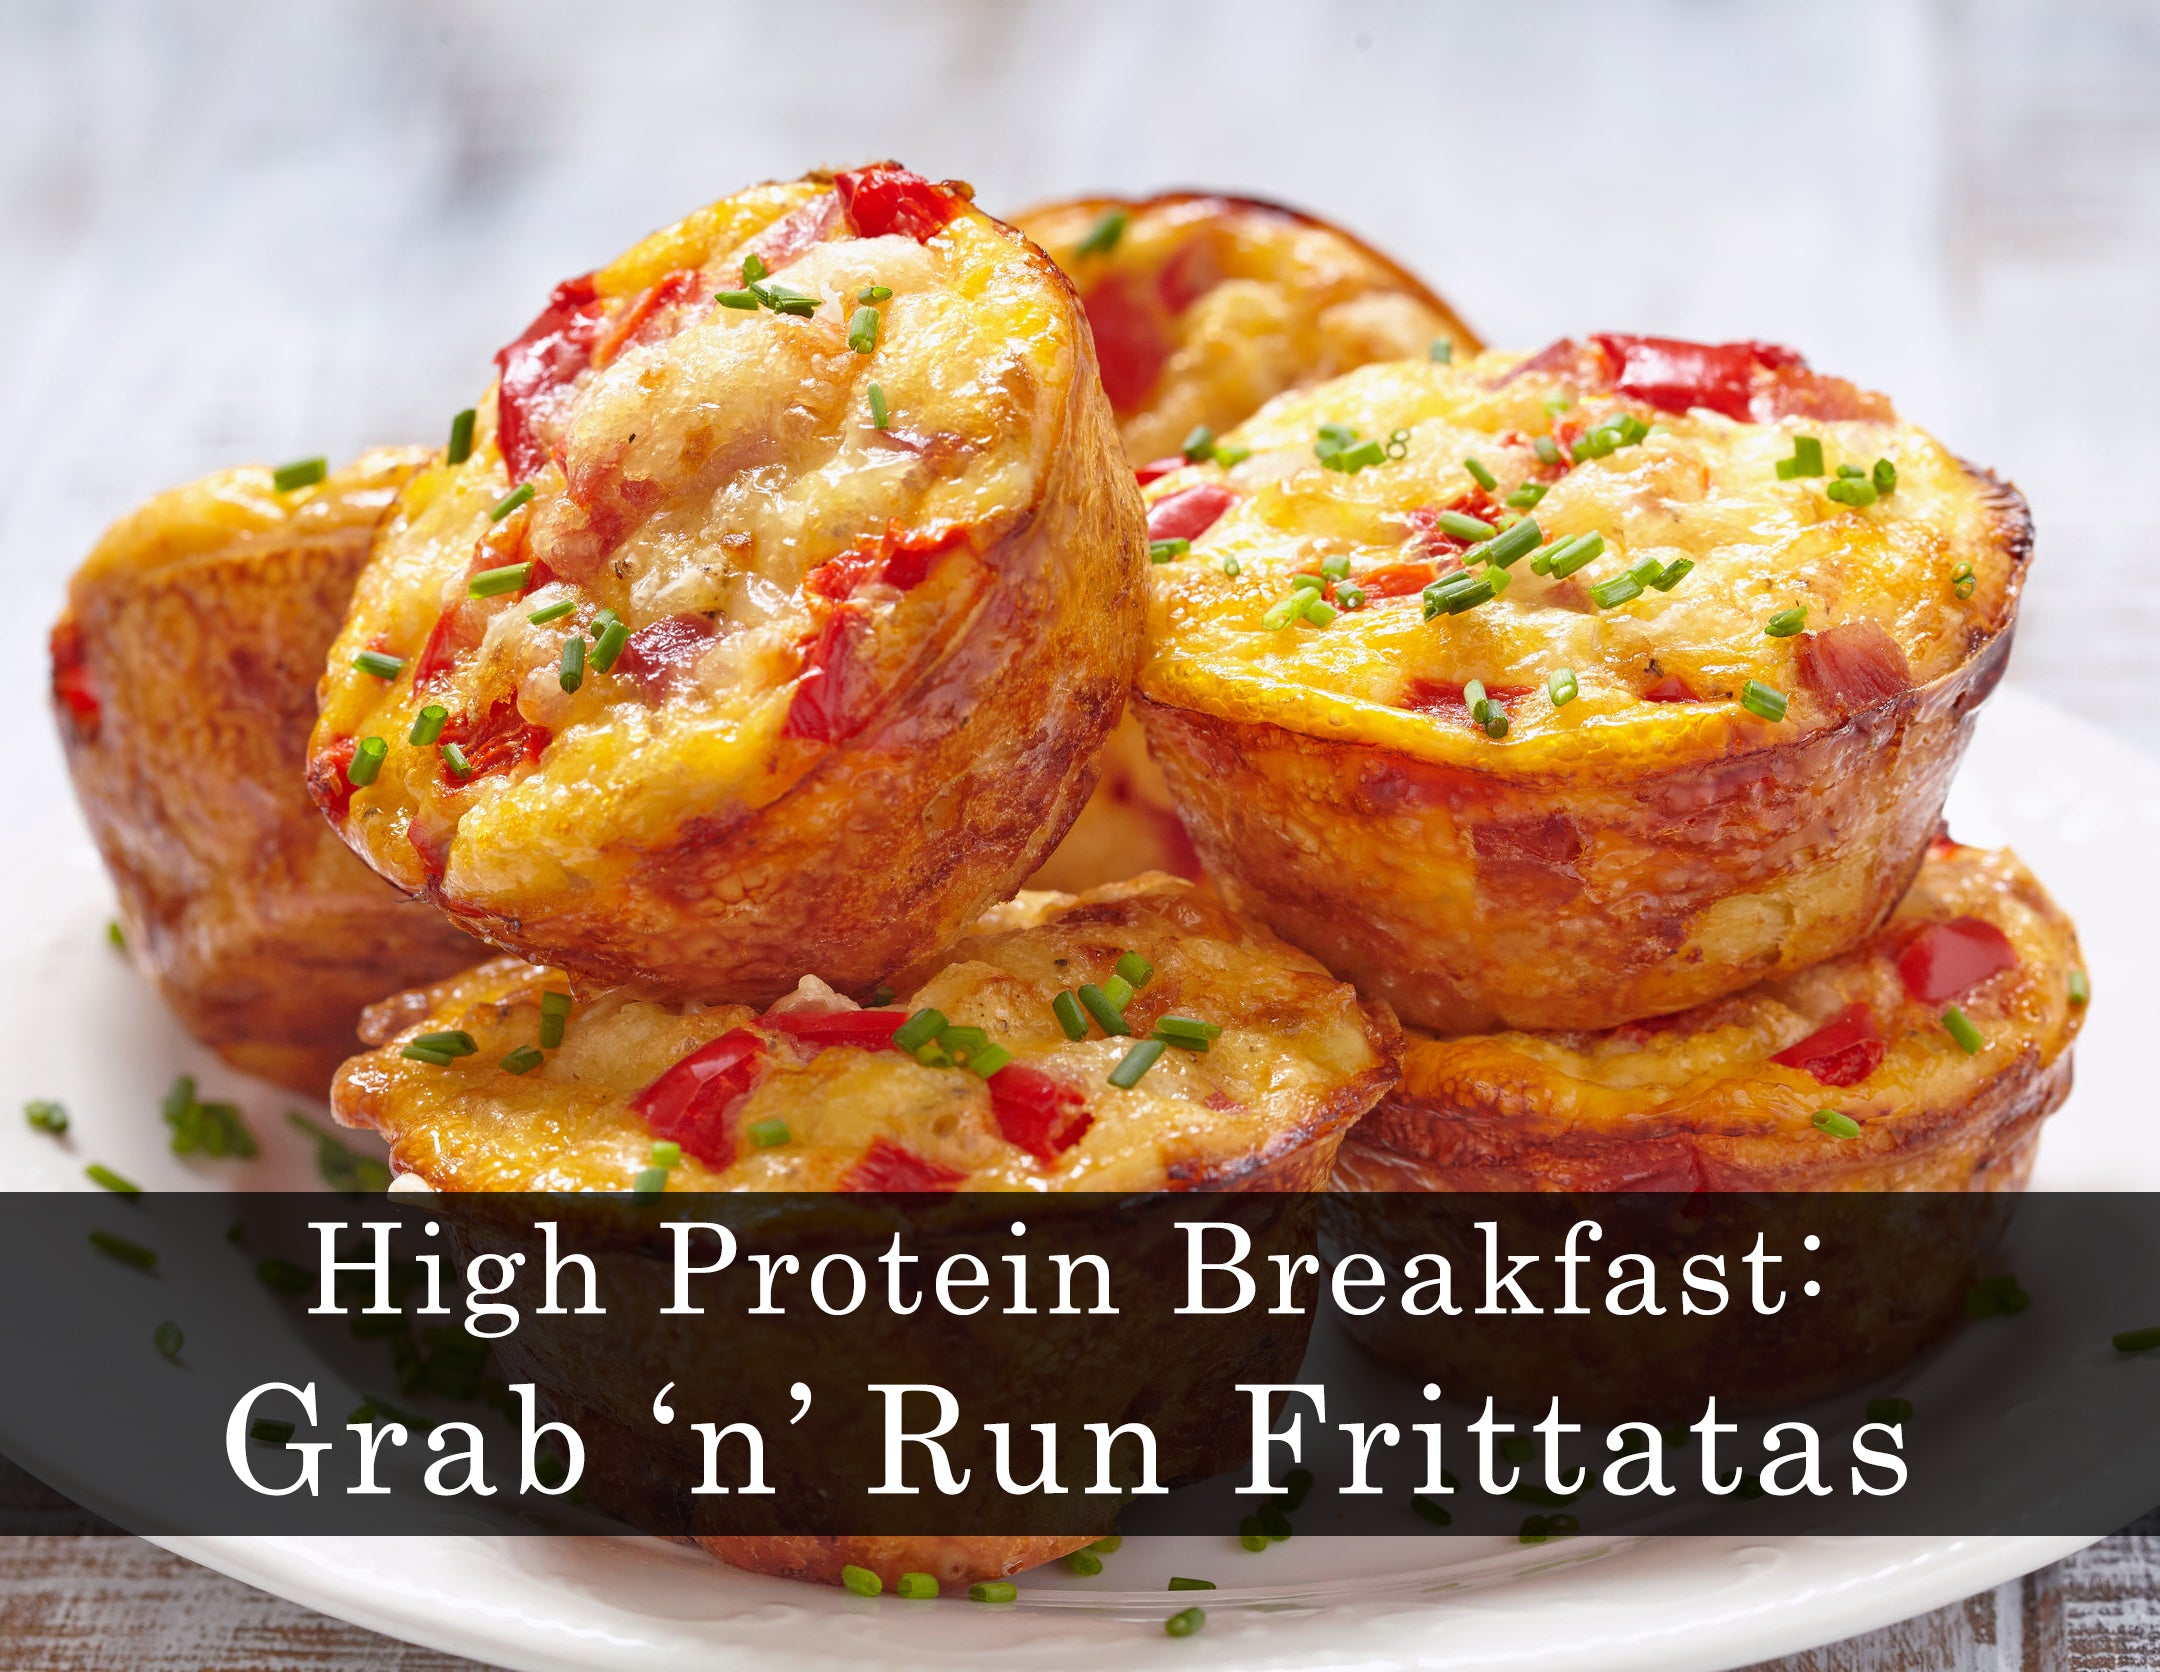 High Protein Breakfast: Grab 'n' Run Frittatas